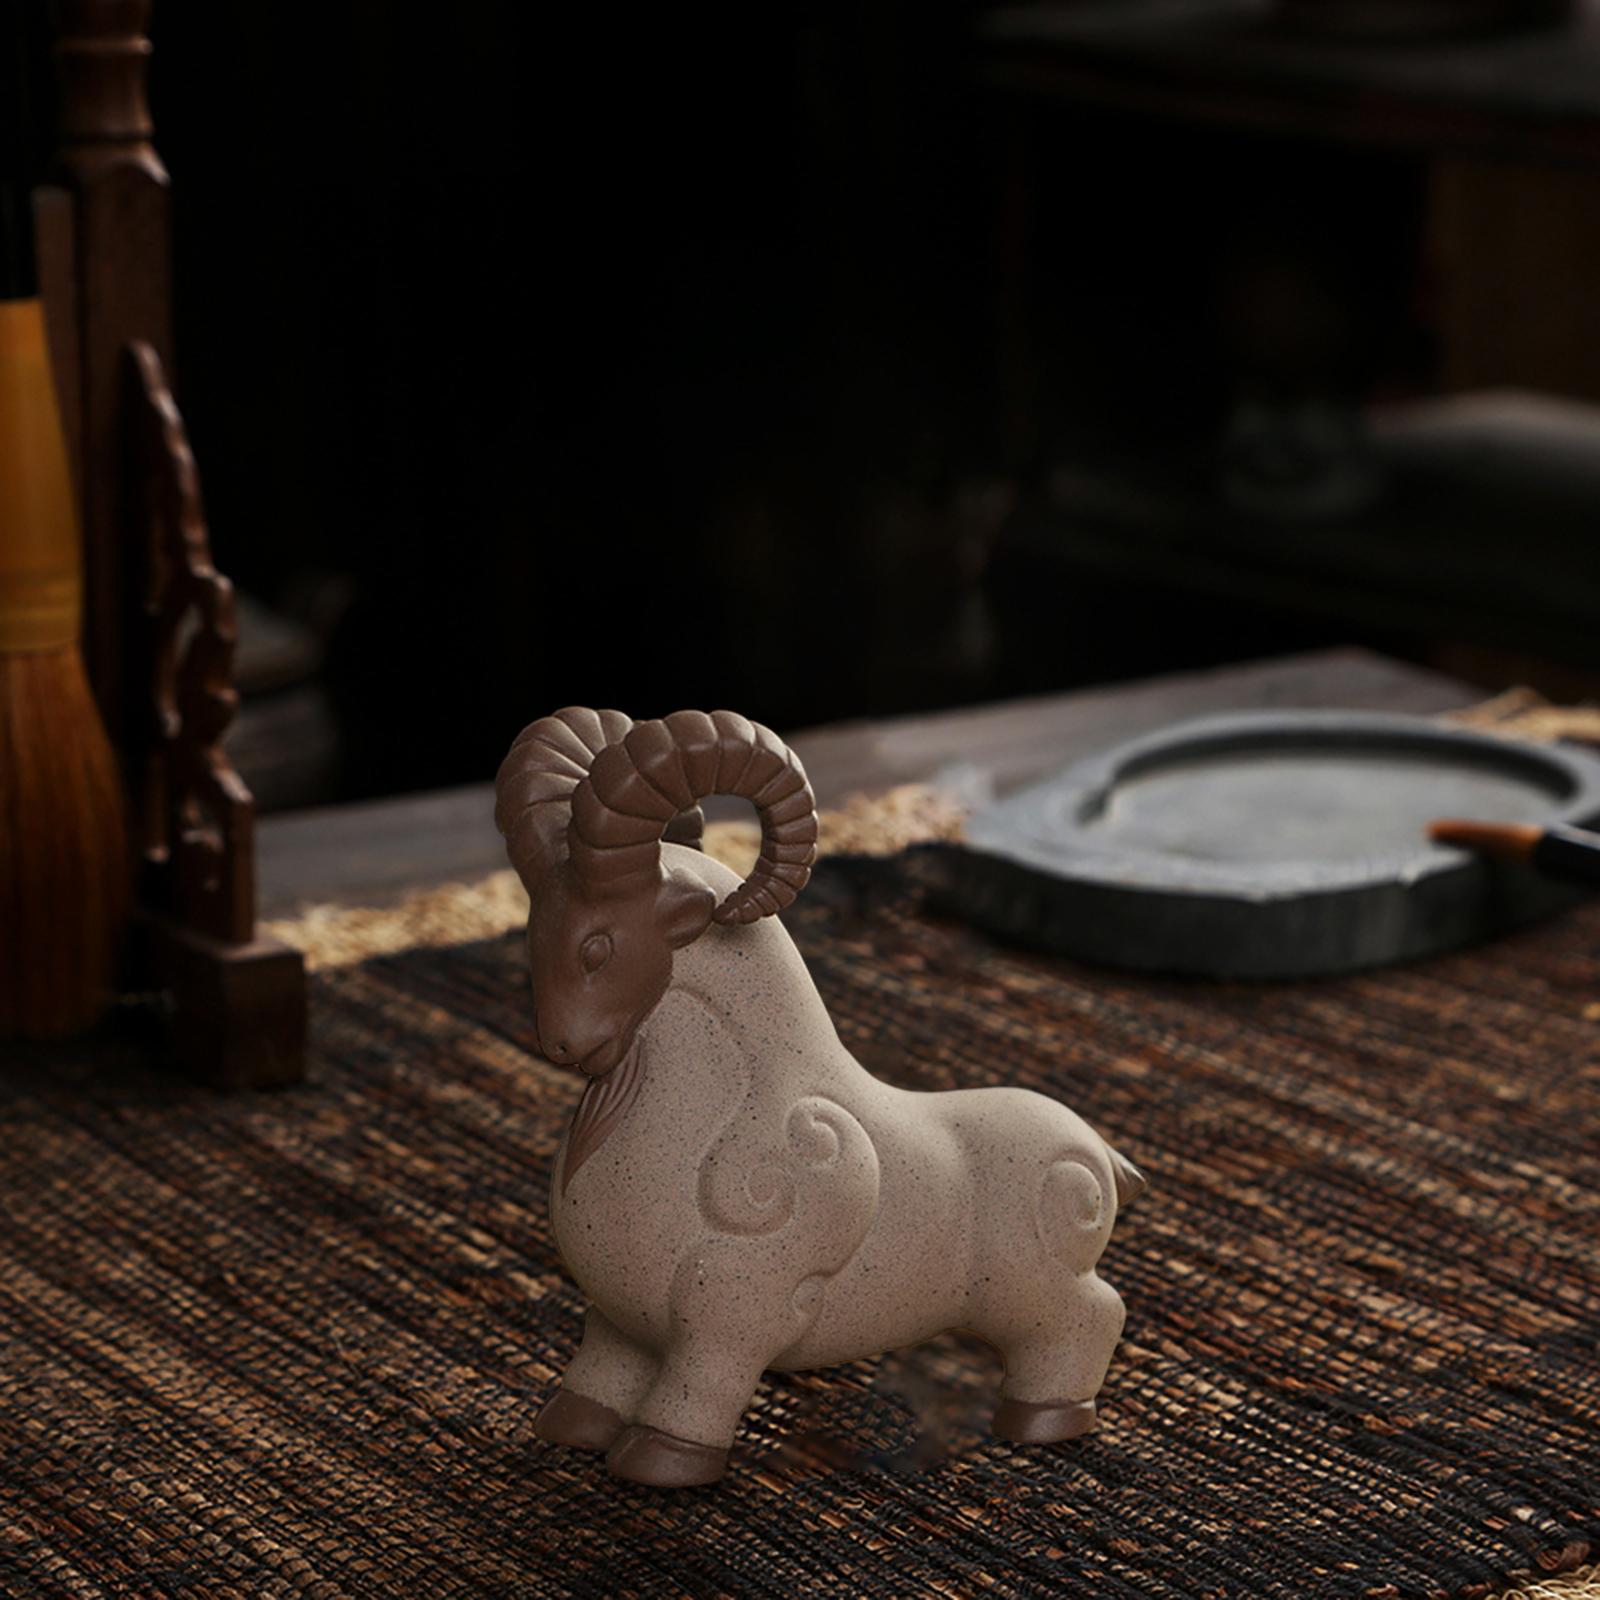 Clay Goat Mini Tea Pet Figurine Cute DIY Terrarium Crafts for Home or Office Male Goat